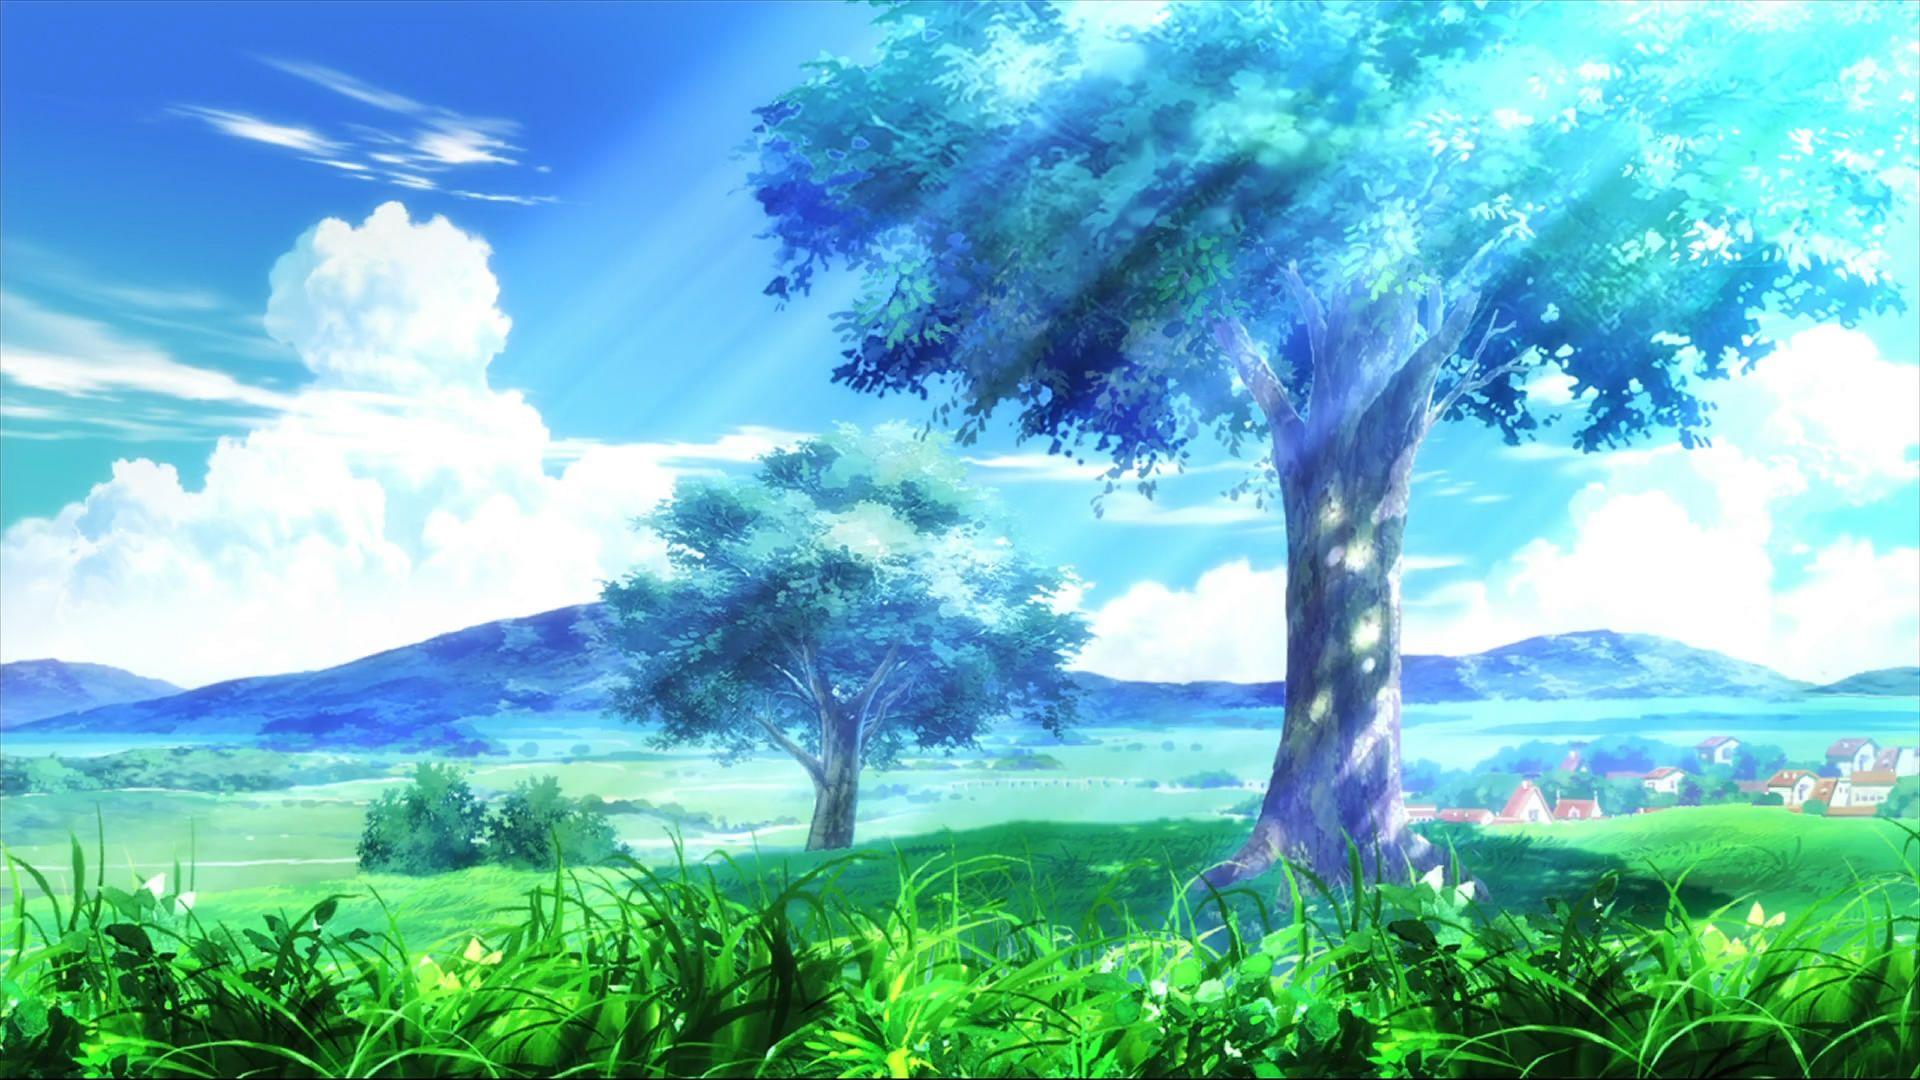 Anime Scenery Desktop Background. Wallmeta.com. Pemandangan